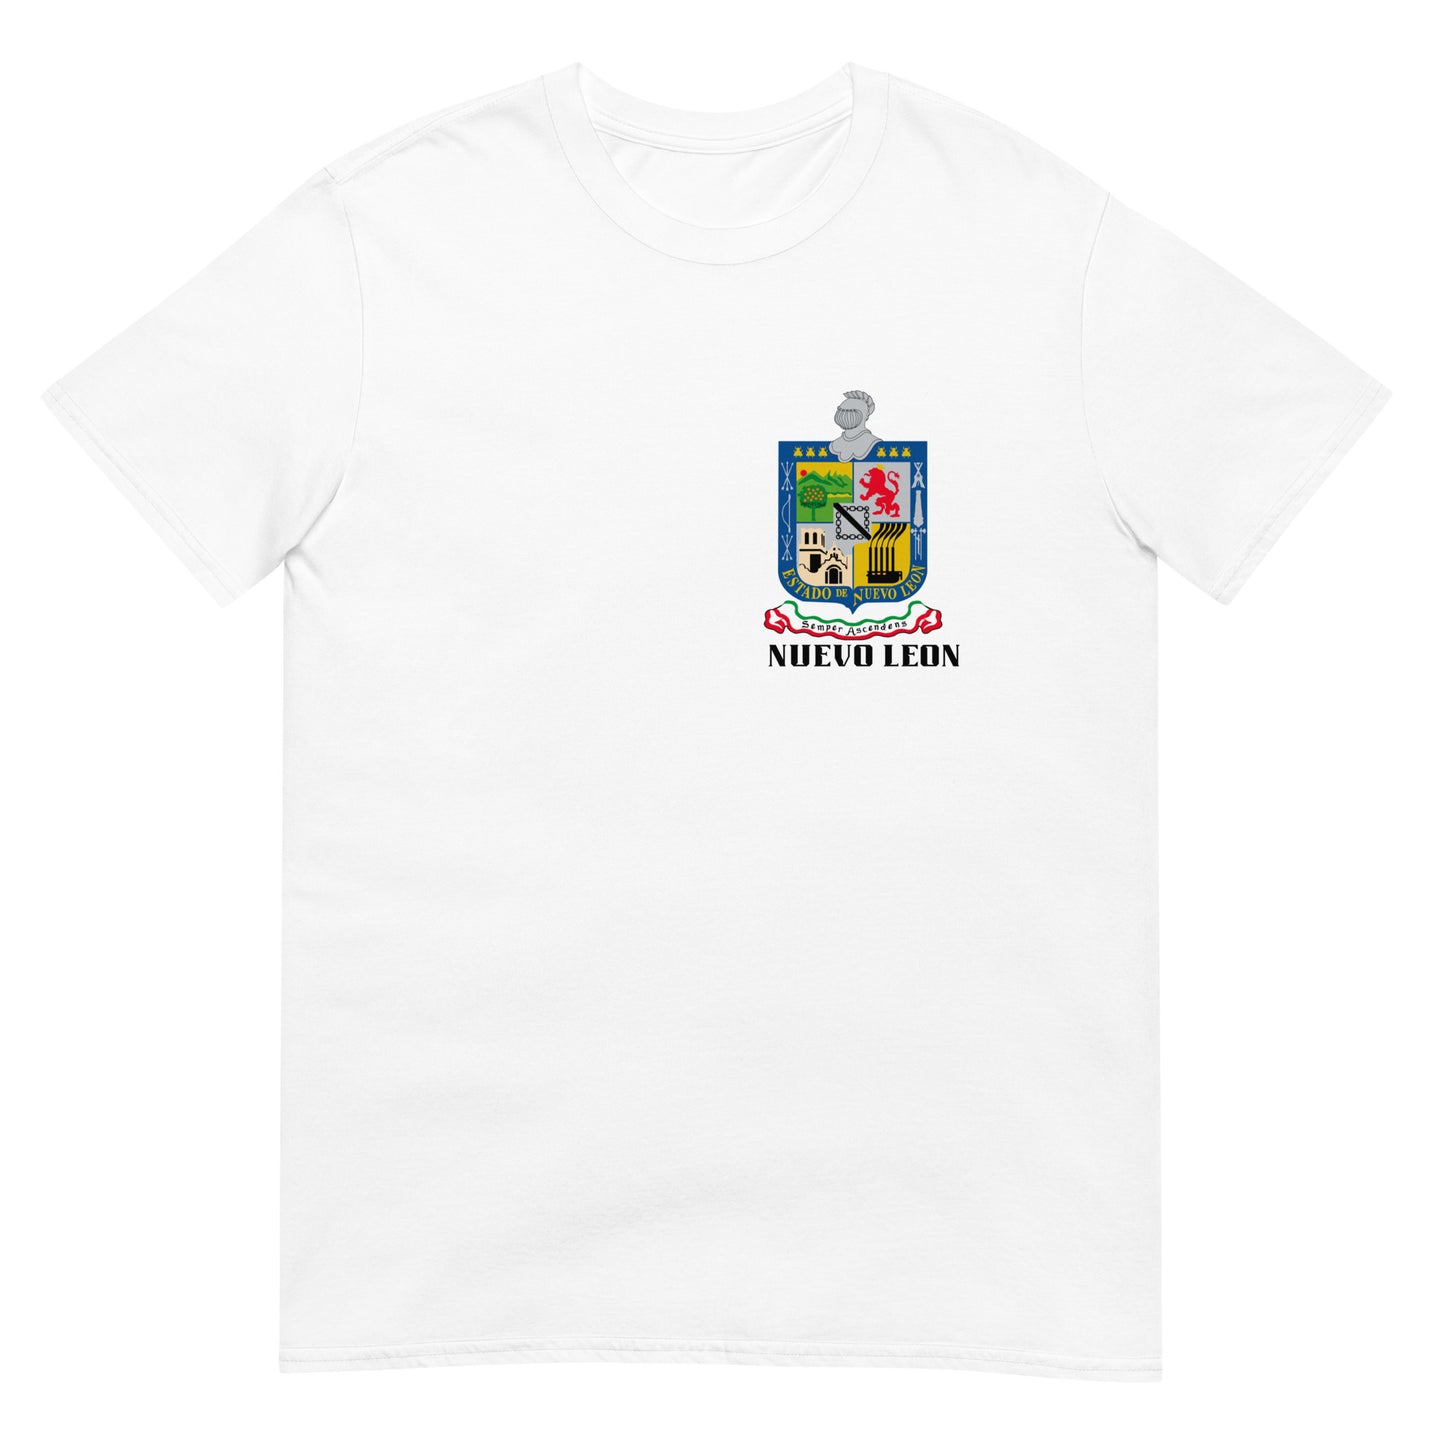 Nuevo León- T-Shirt